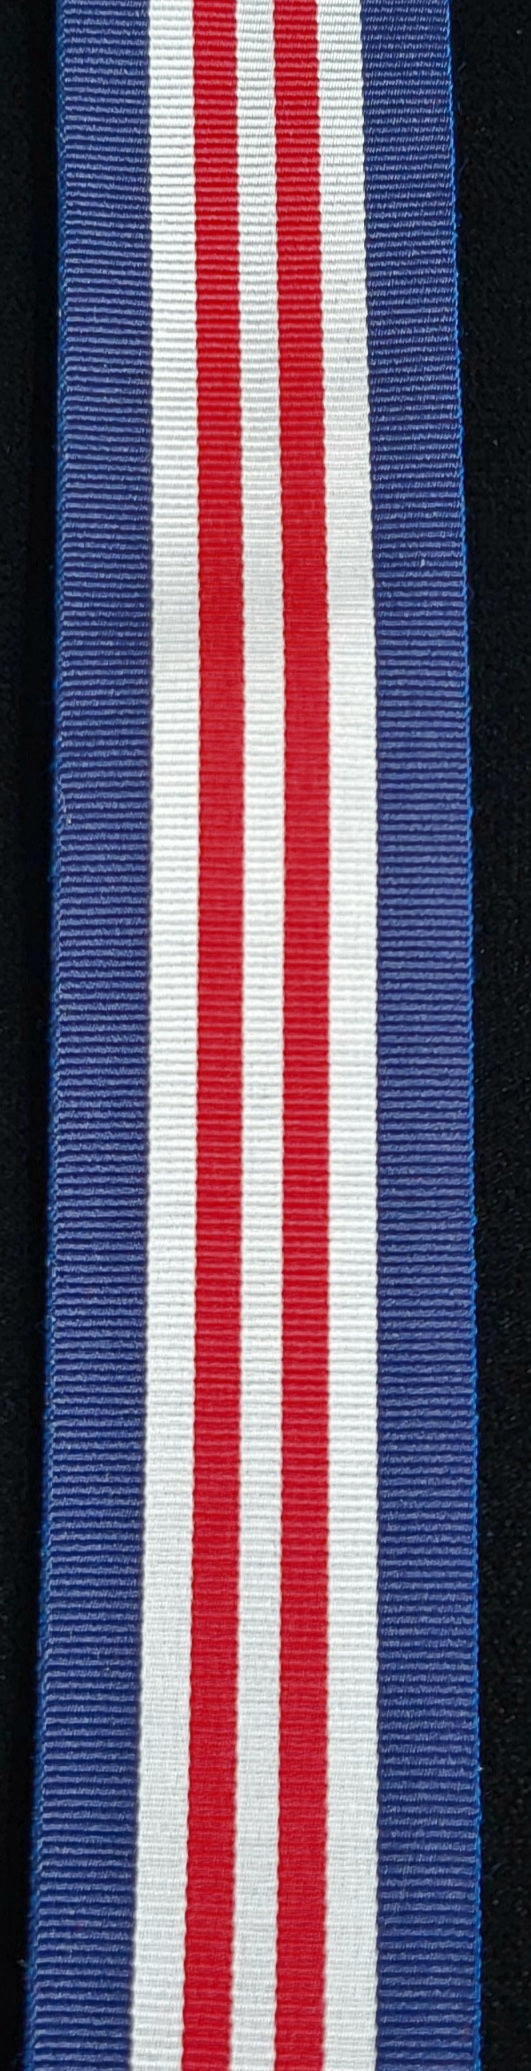 Ribbon, Military Medal